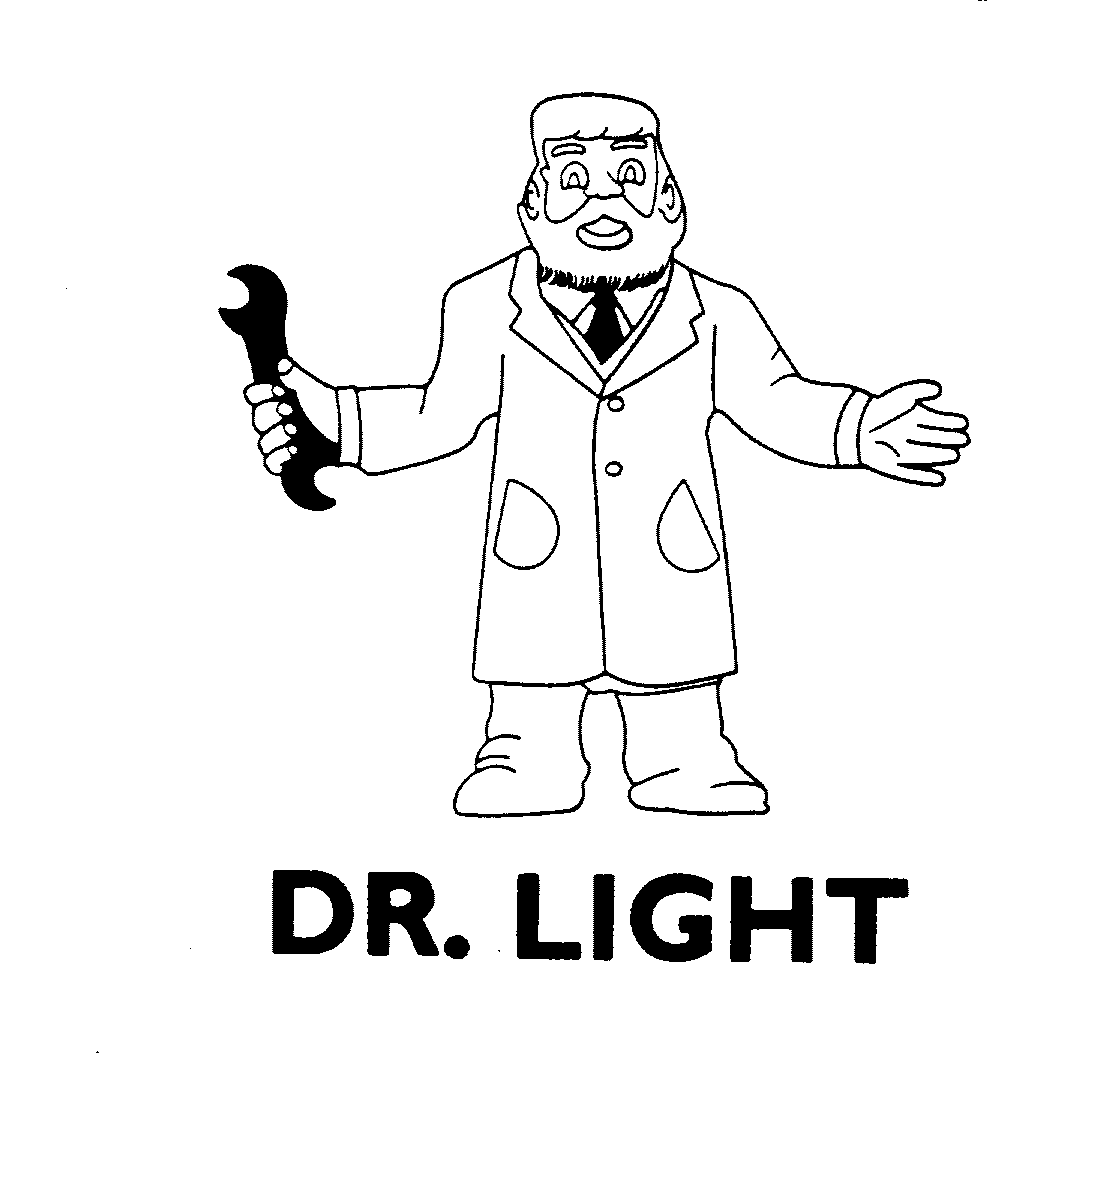  DR. LIGHT